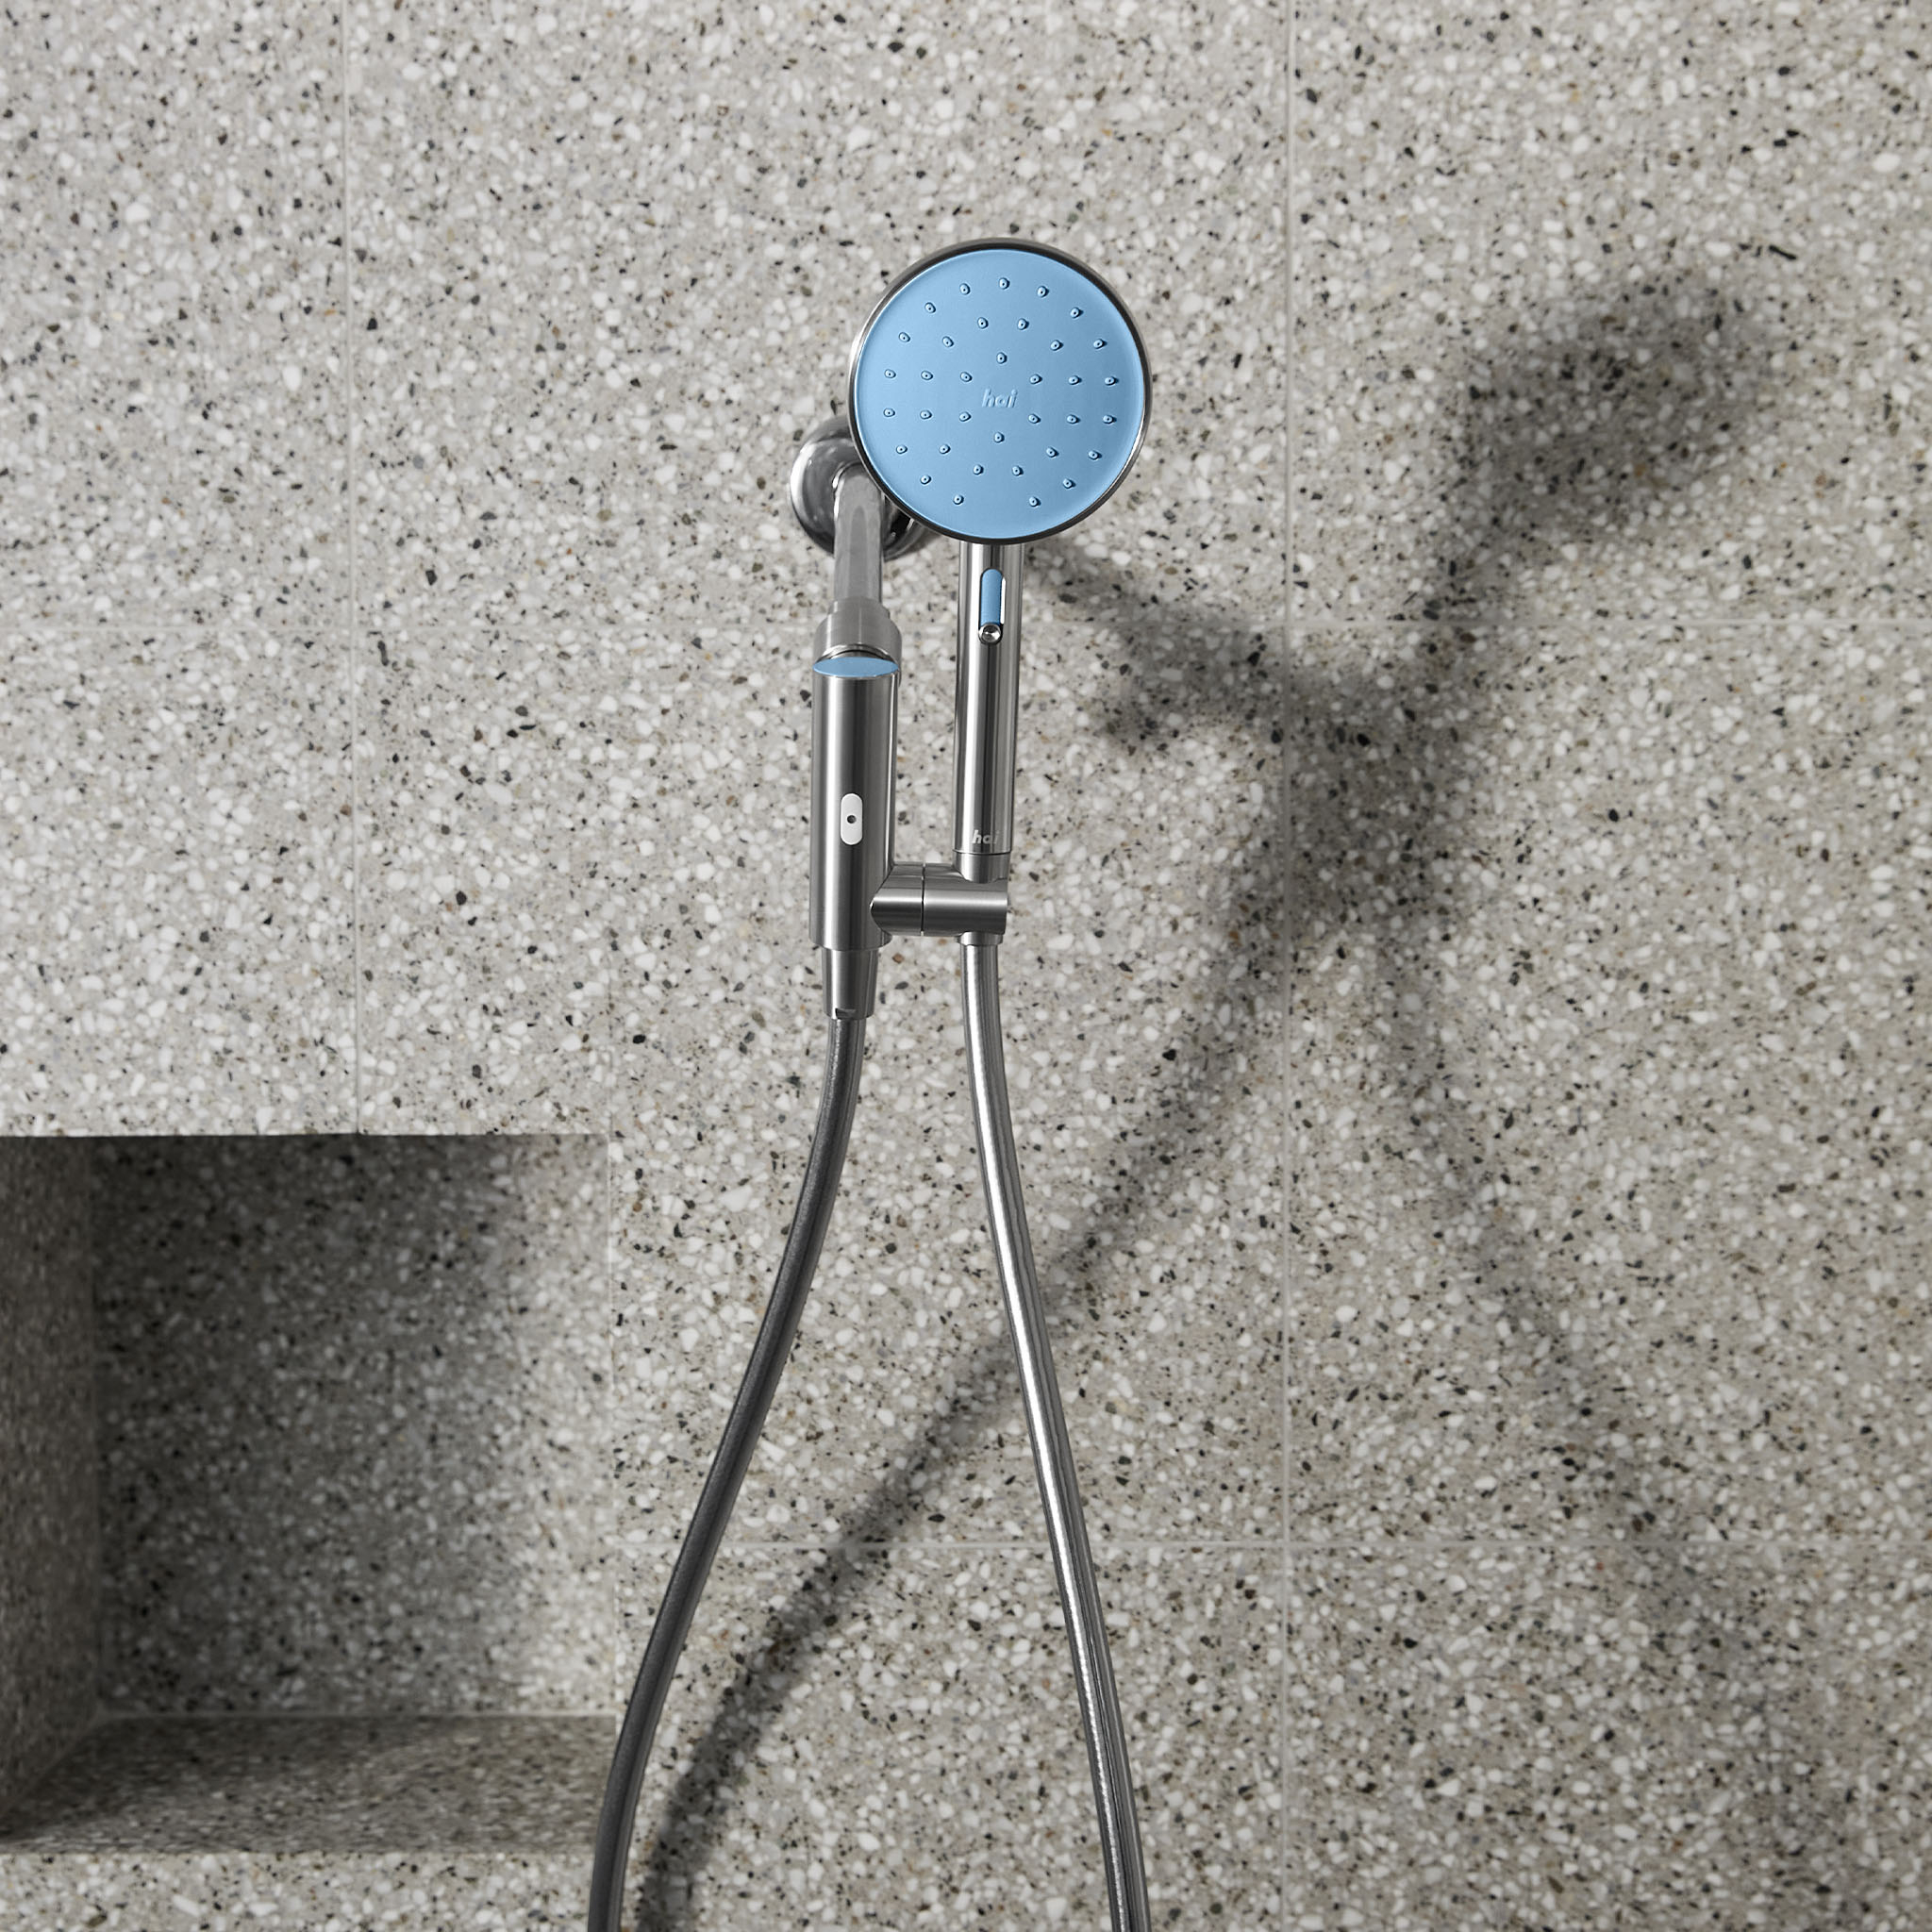 hai infusions smart showerhead: Is a Bluetooth showerhead worth $240?